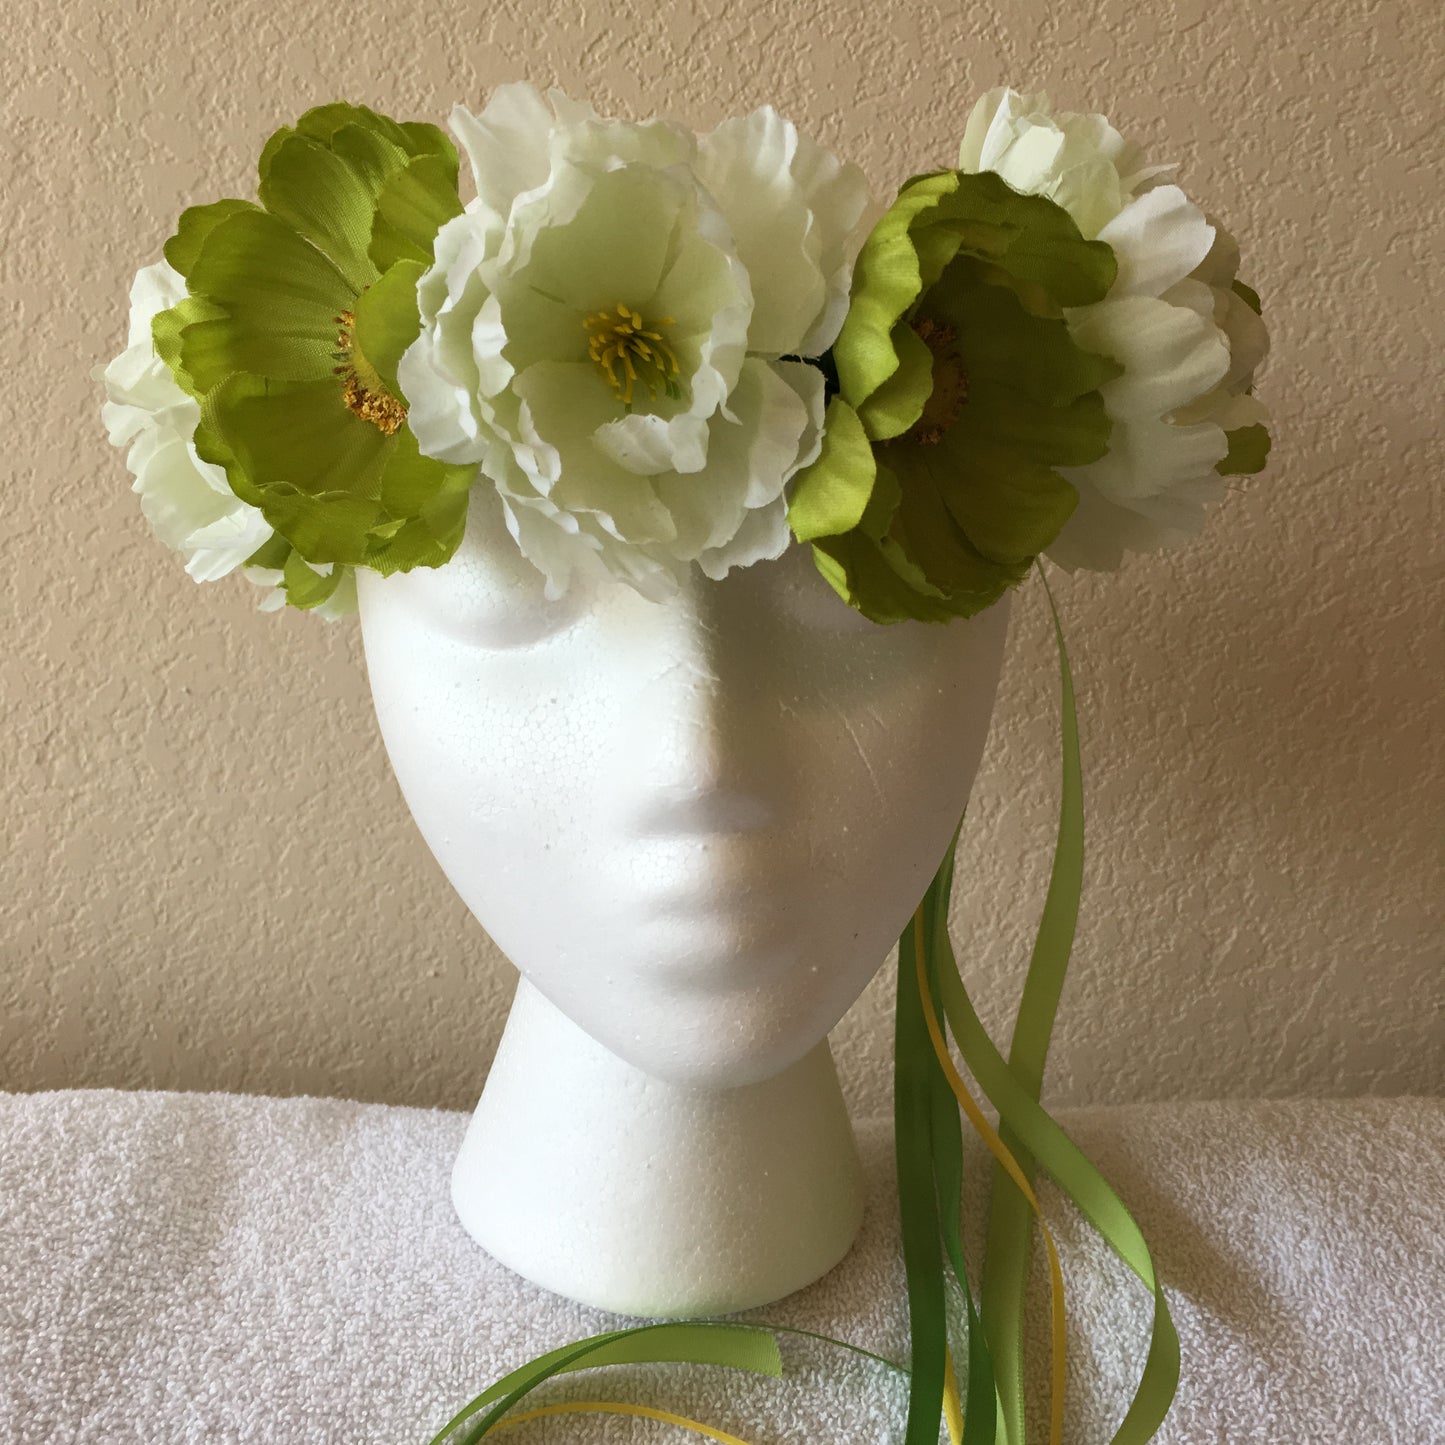 Medium Wreath - Bright green & pale green flowers